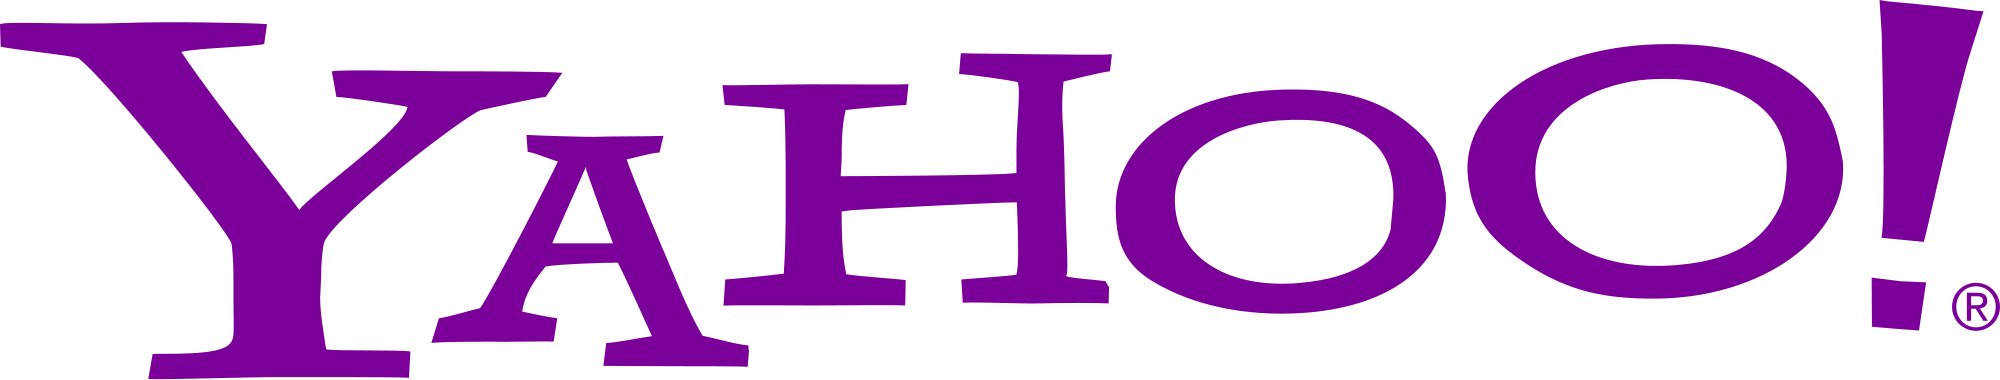 Yahoo! Brand Logo